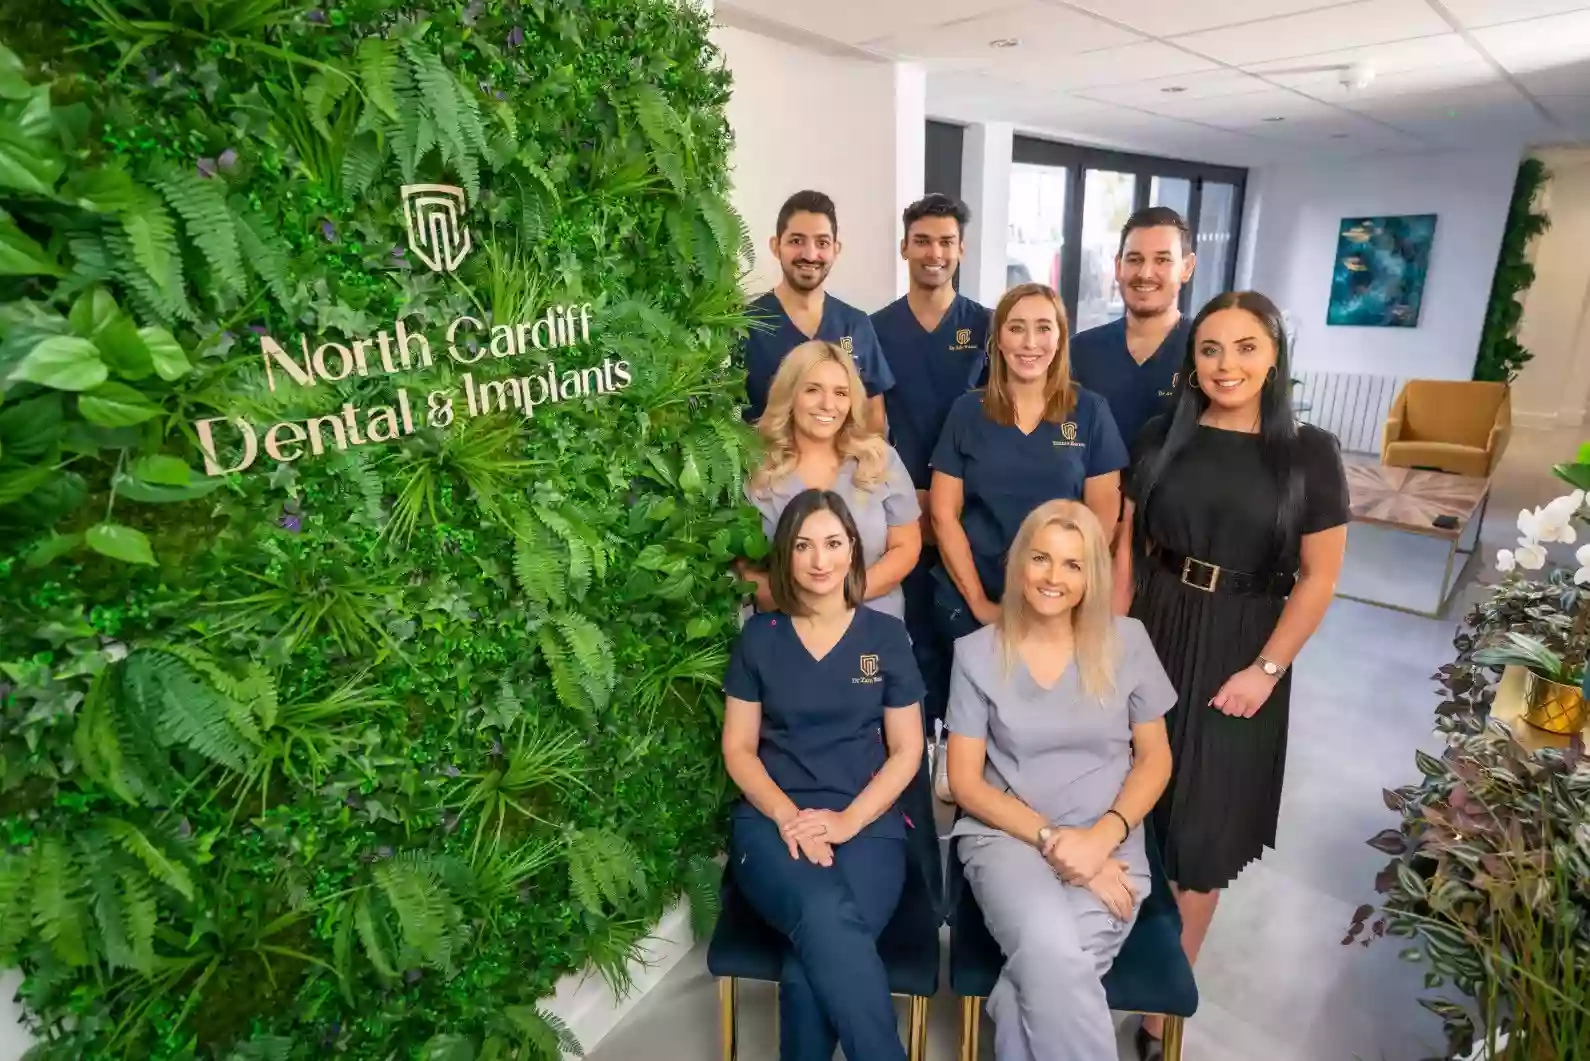 North Cardiff Dental & Implants